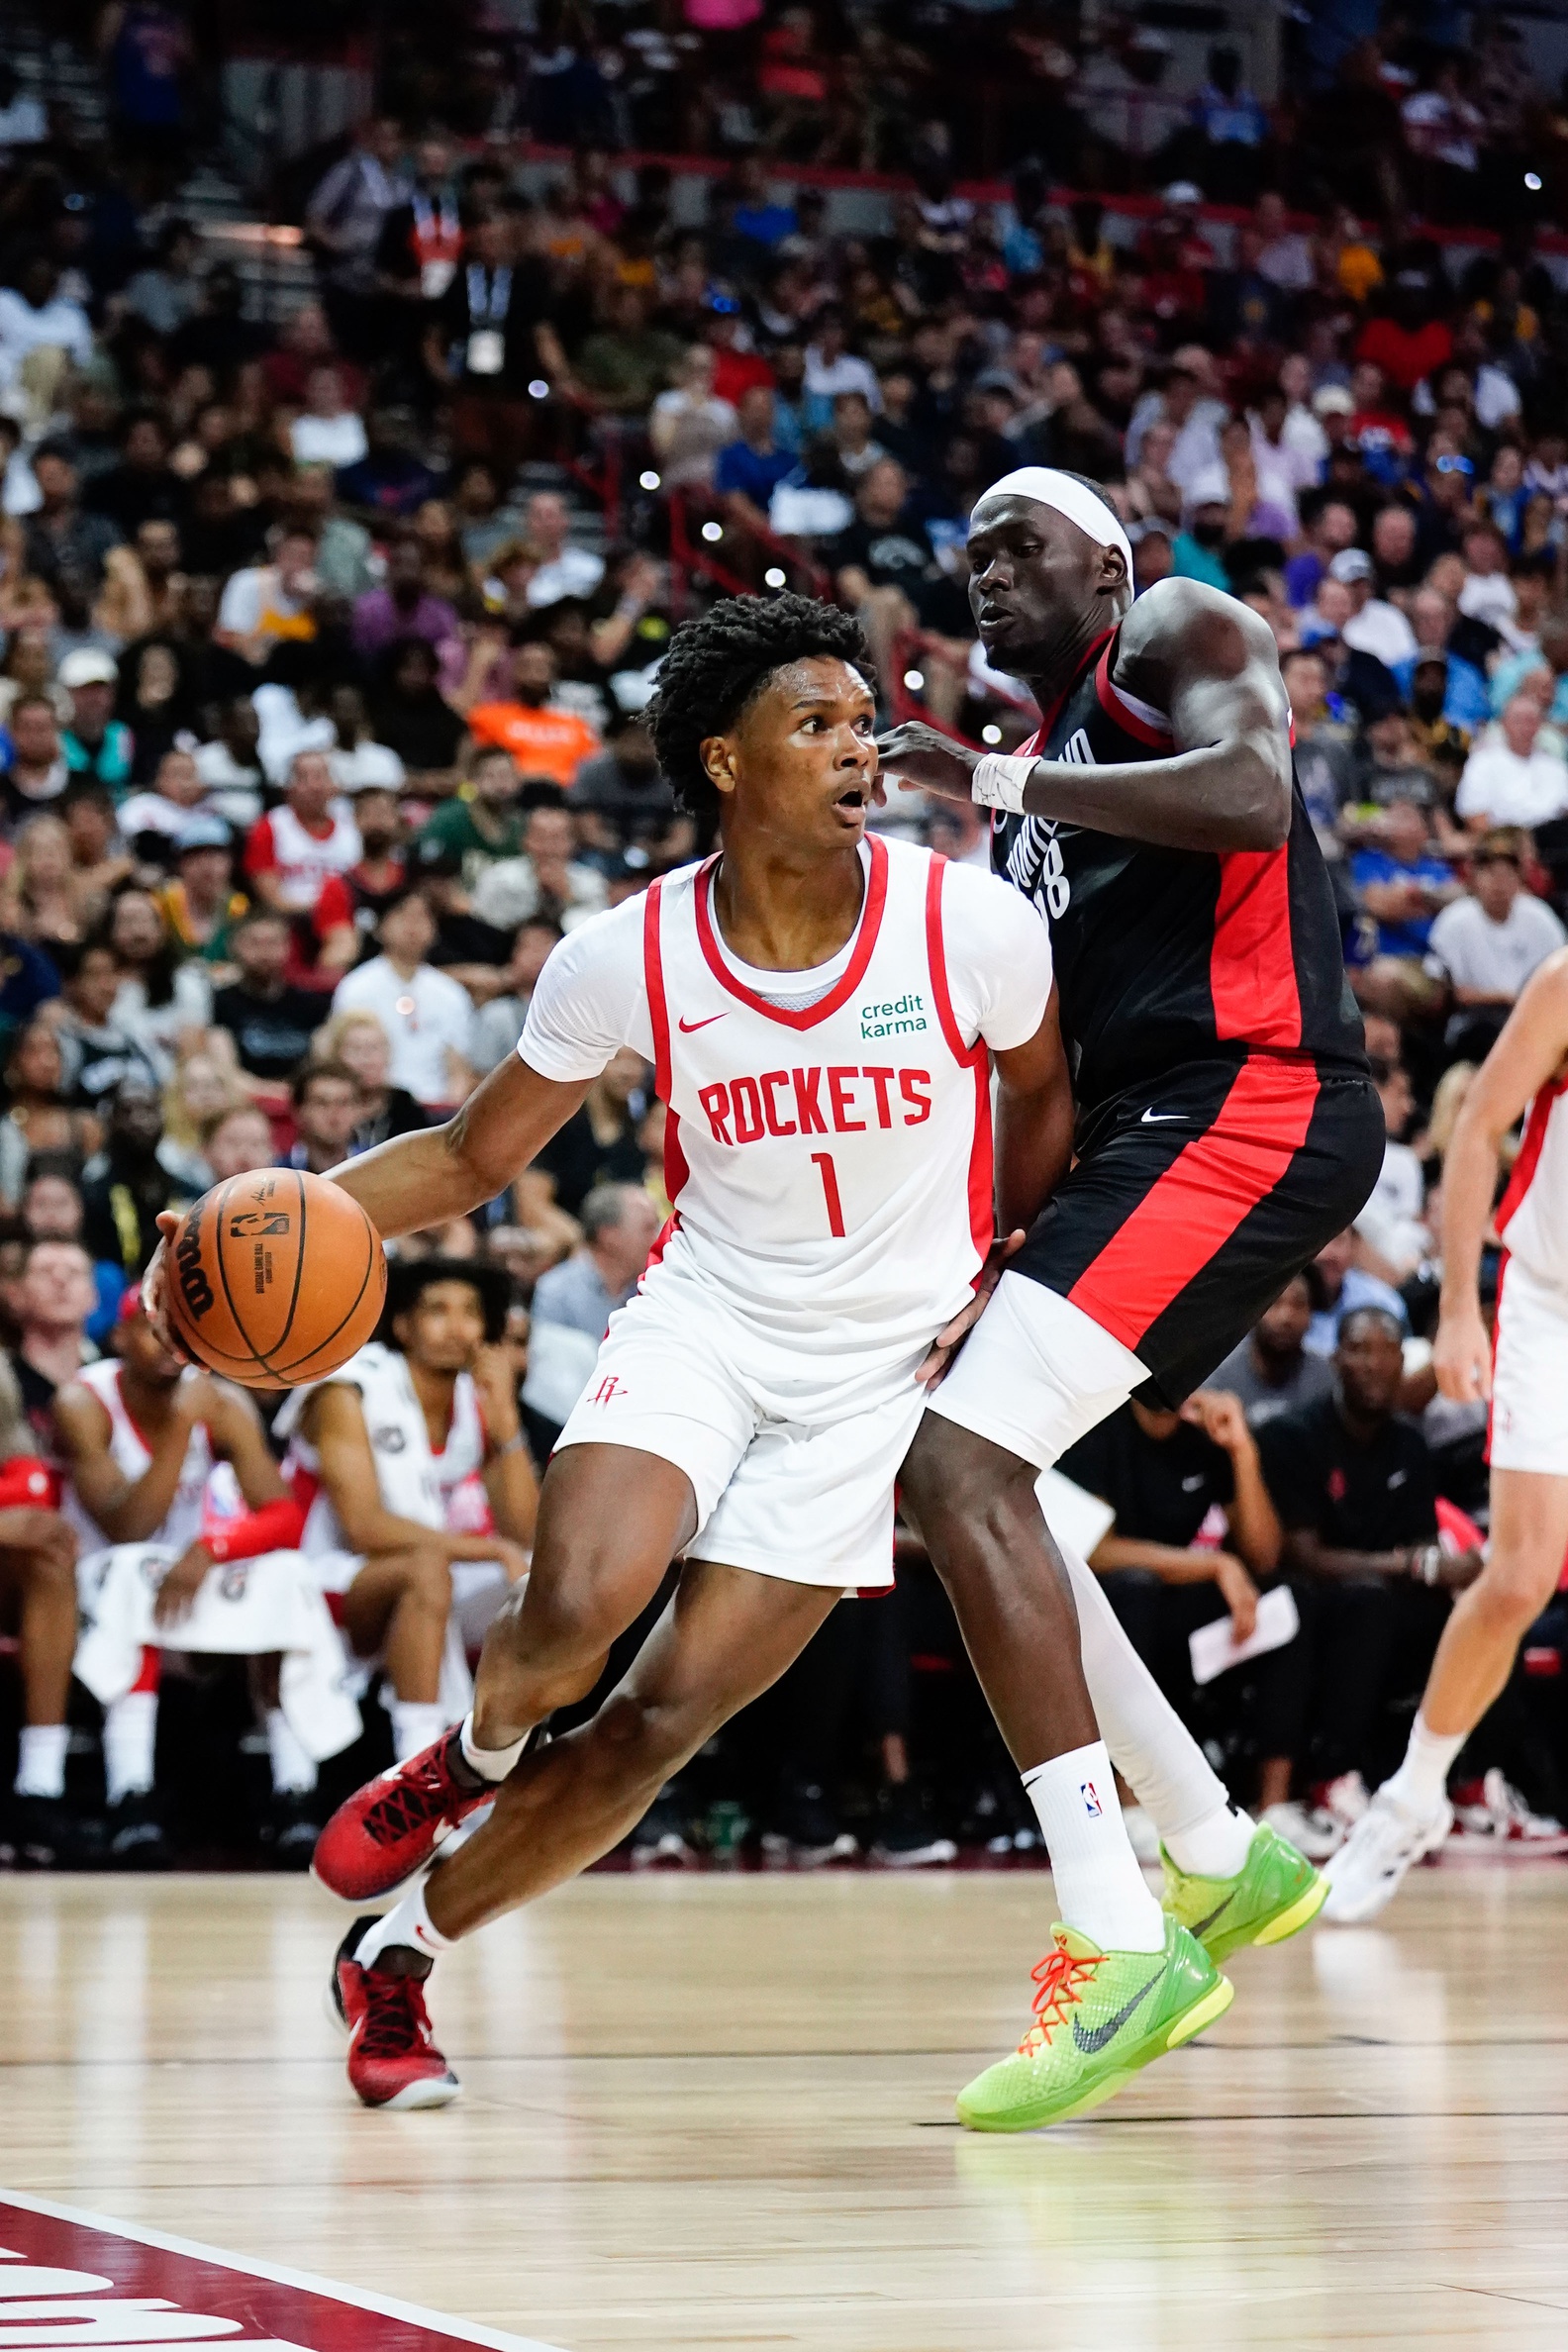 Houston Rockets: Tari Eason named to All-NBA Summer League first team